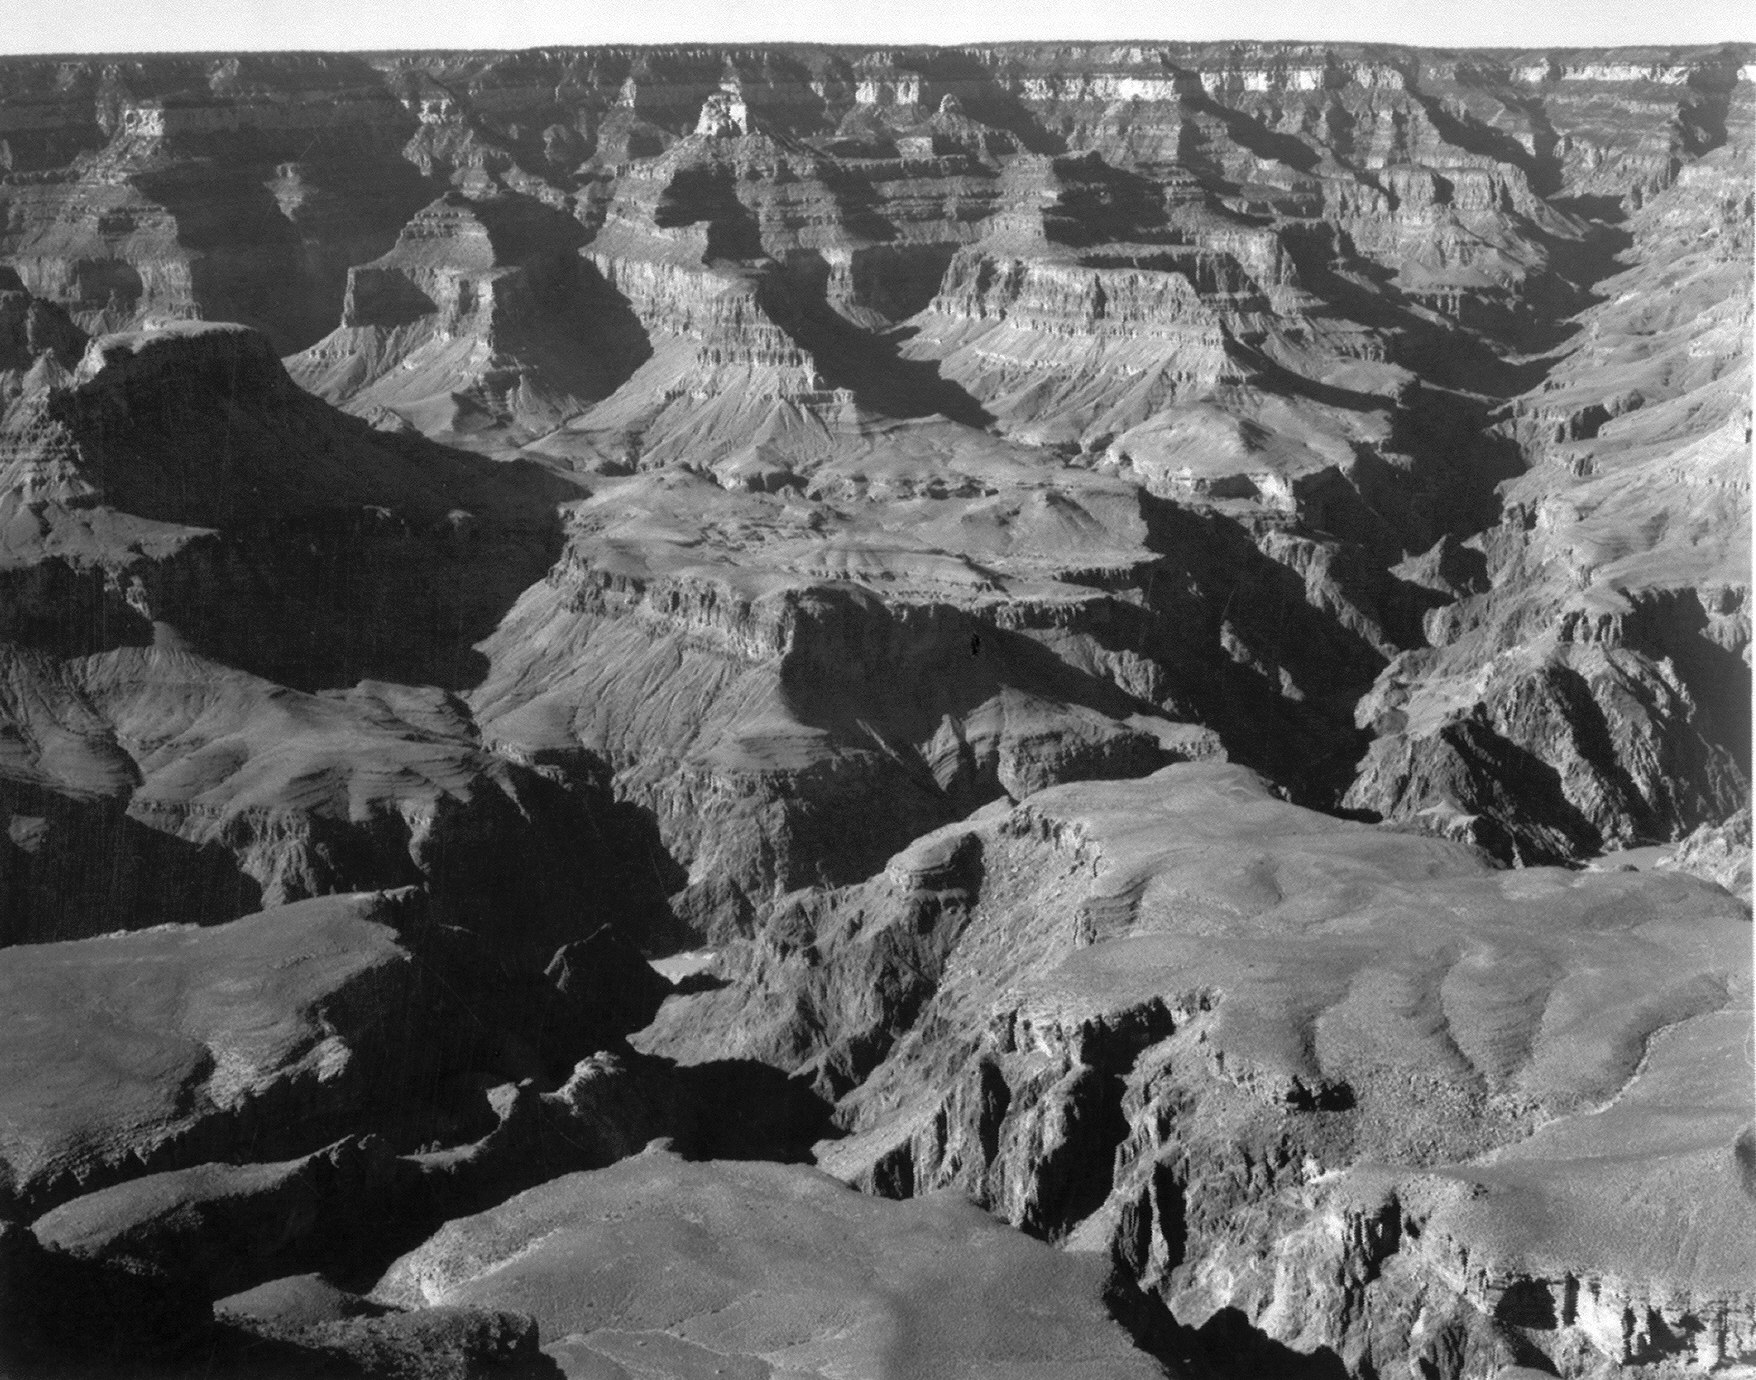 Ansel Adams: The Tetons - Snake River, Grand Teton 